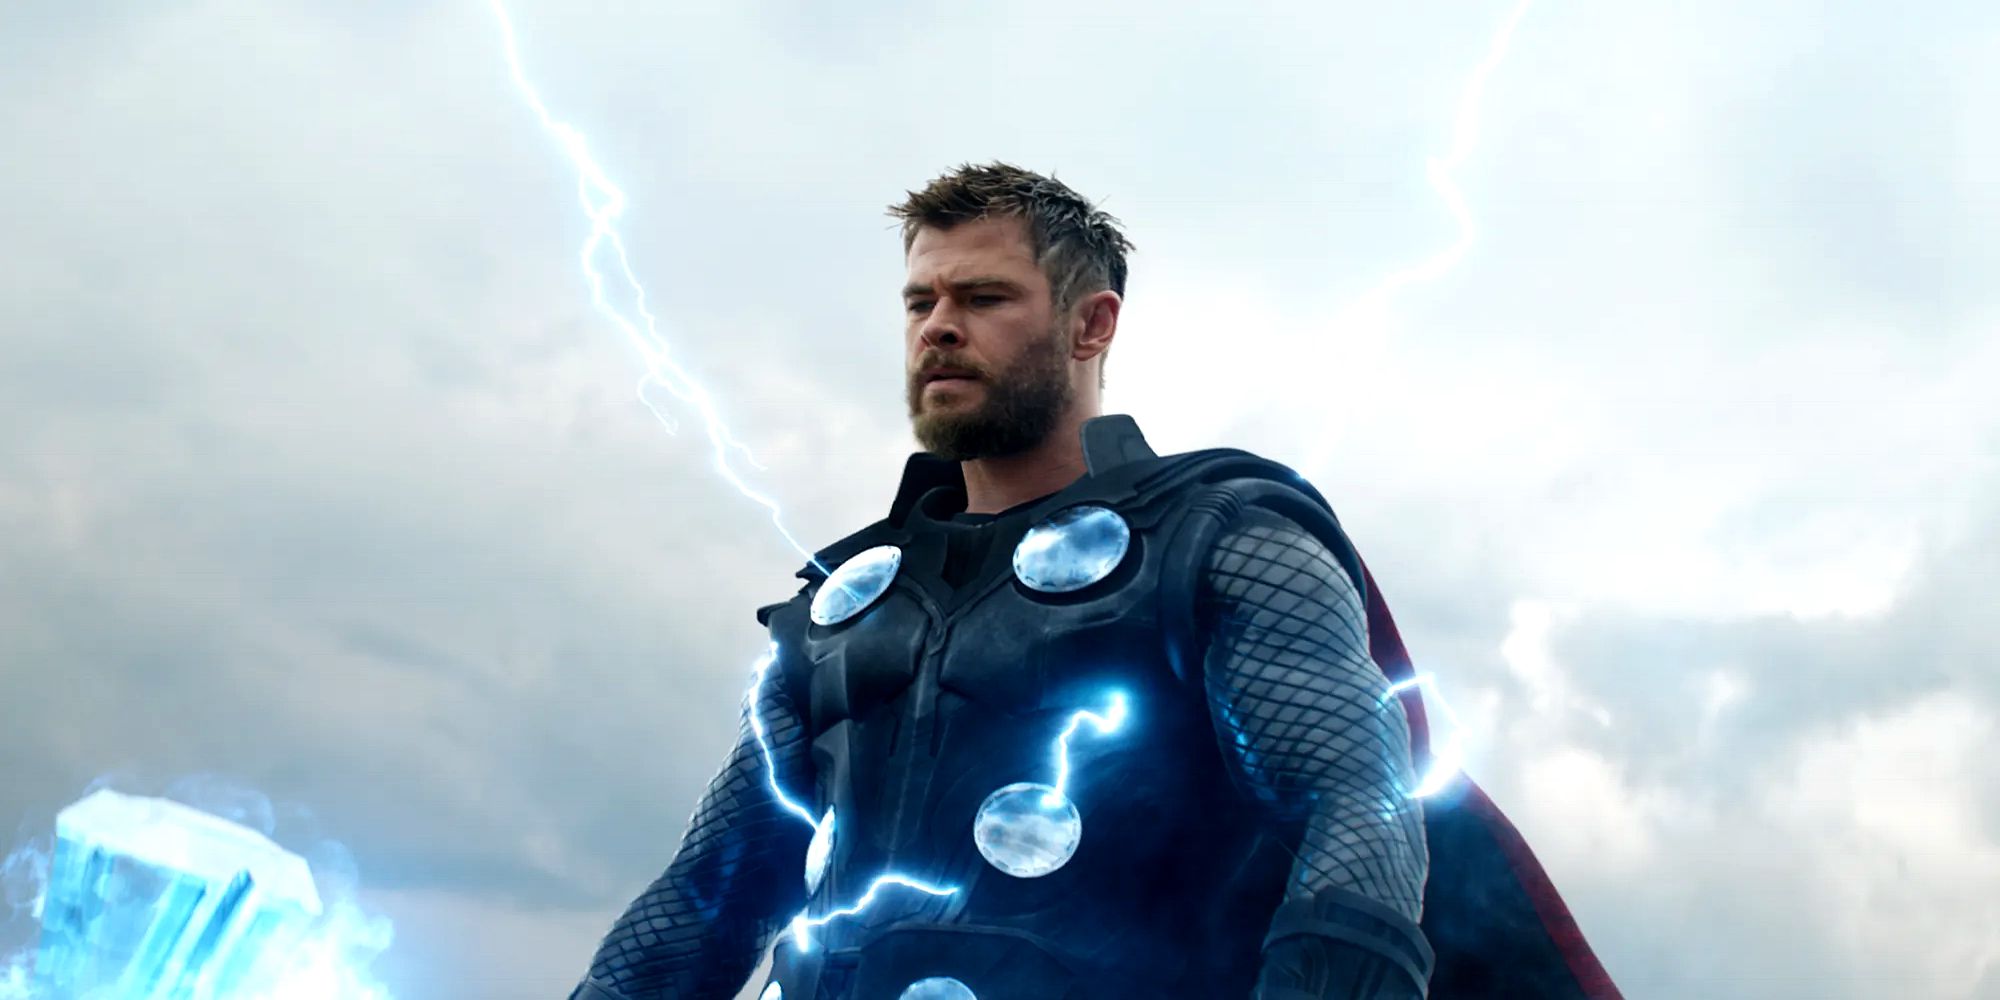 Thor arrives in Wakanda in Avengers: Infinity War